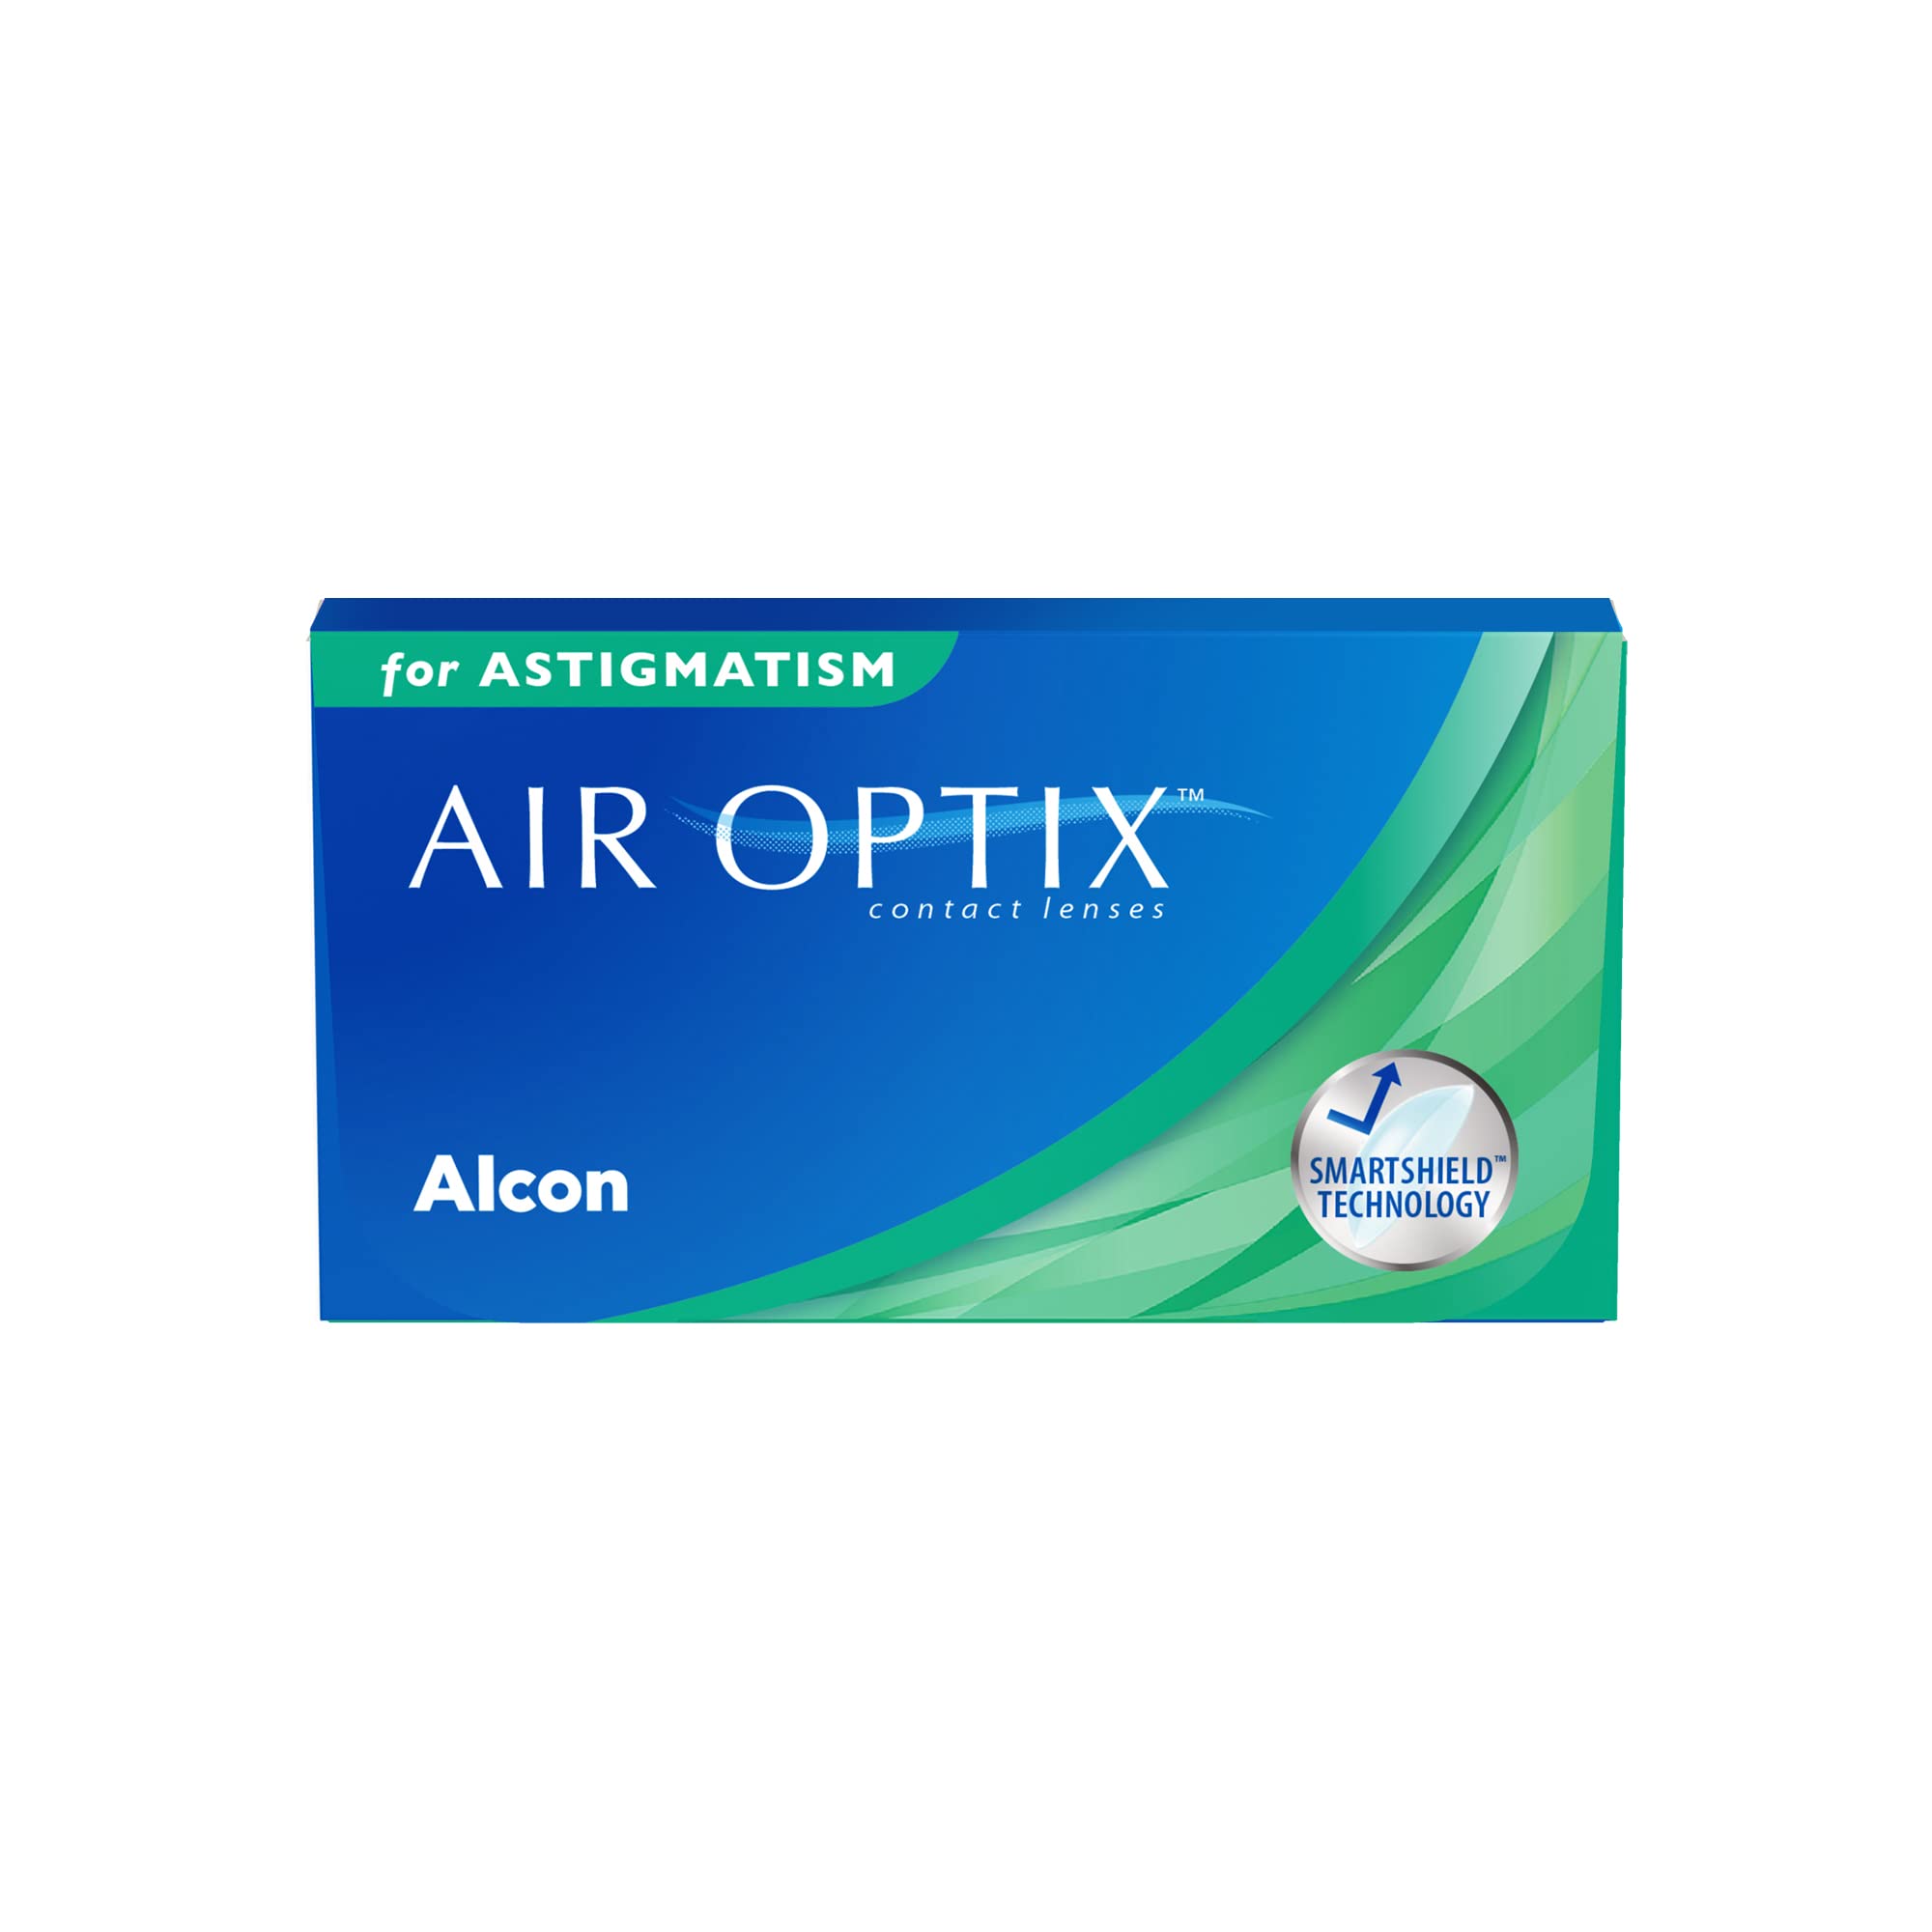 Air Optix for Astigmatism Monatslinsen weich, 6 Stück, BC 8.7 mm, DIA 14.5 mm, CYL -1.25, ACHSE 60, + 2.25 Dioptrien